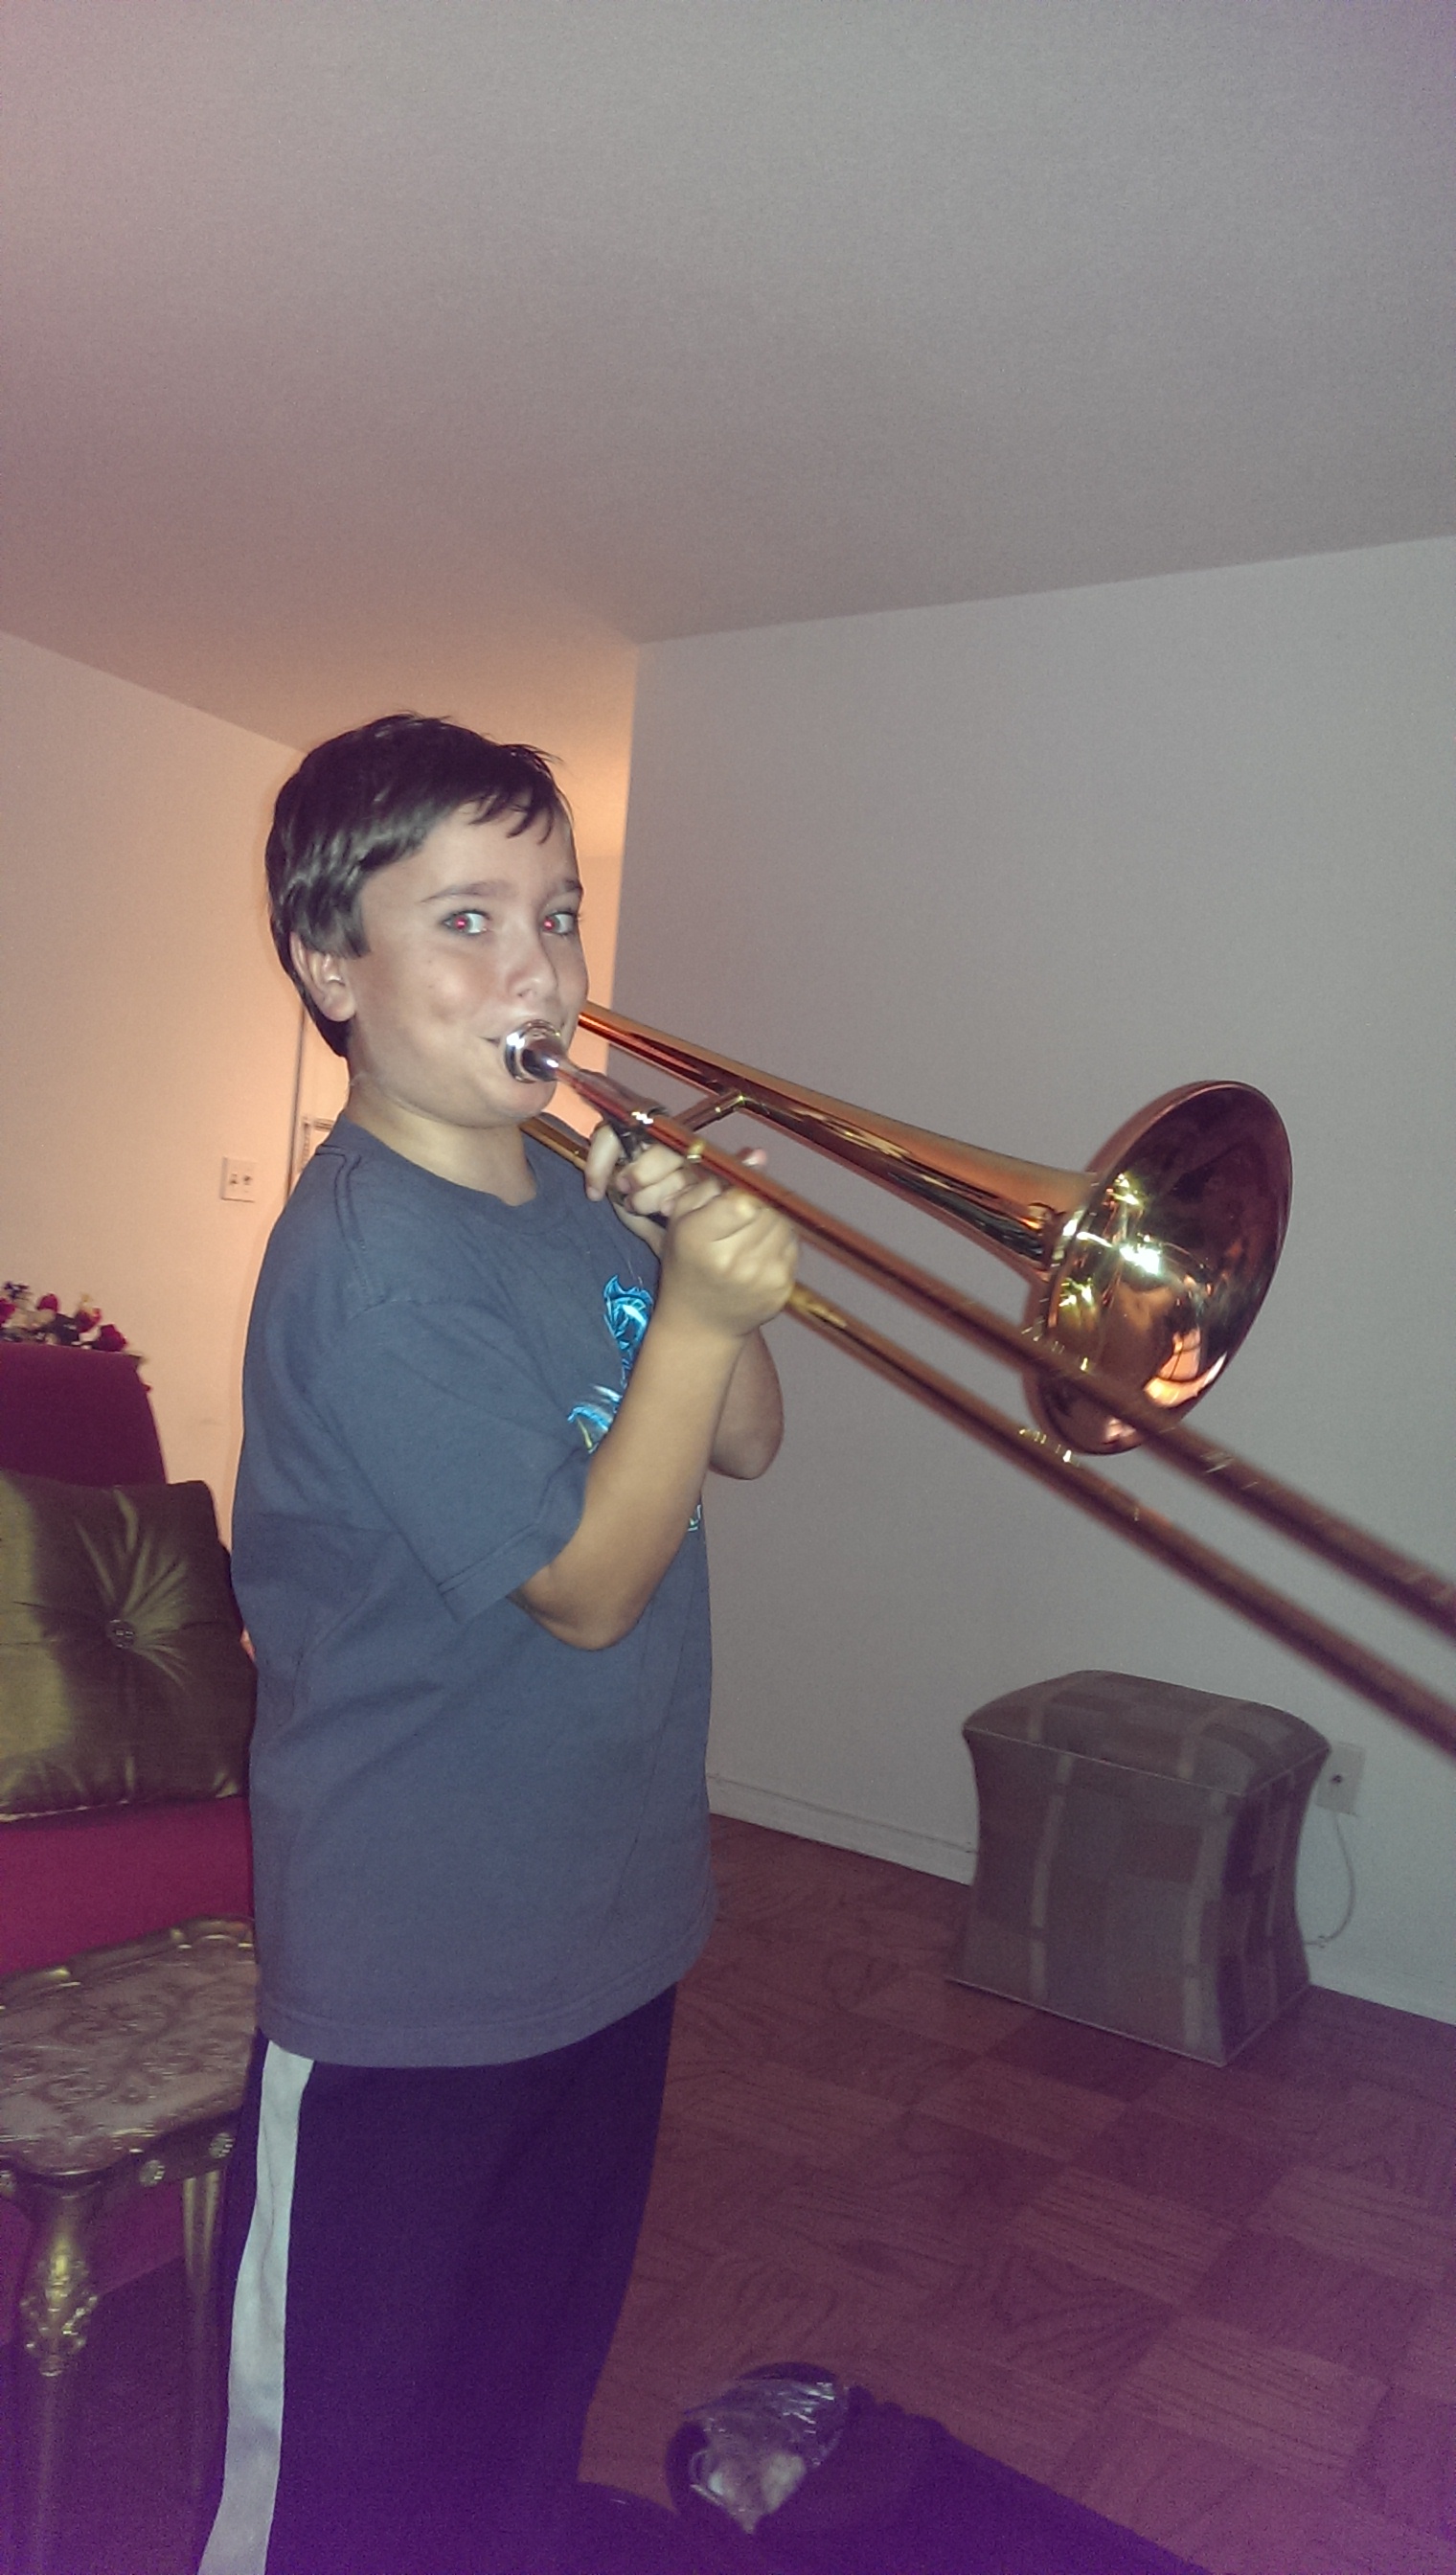 His new favorite instrument - the trombone! 